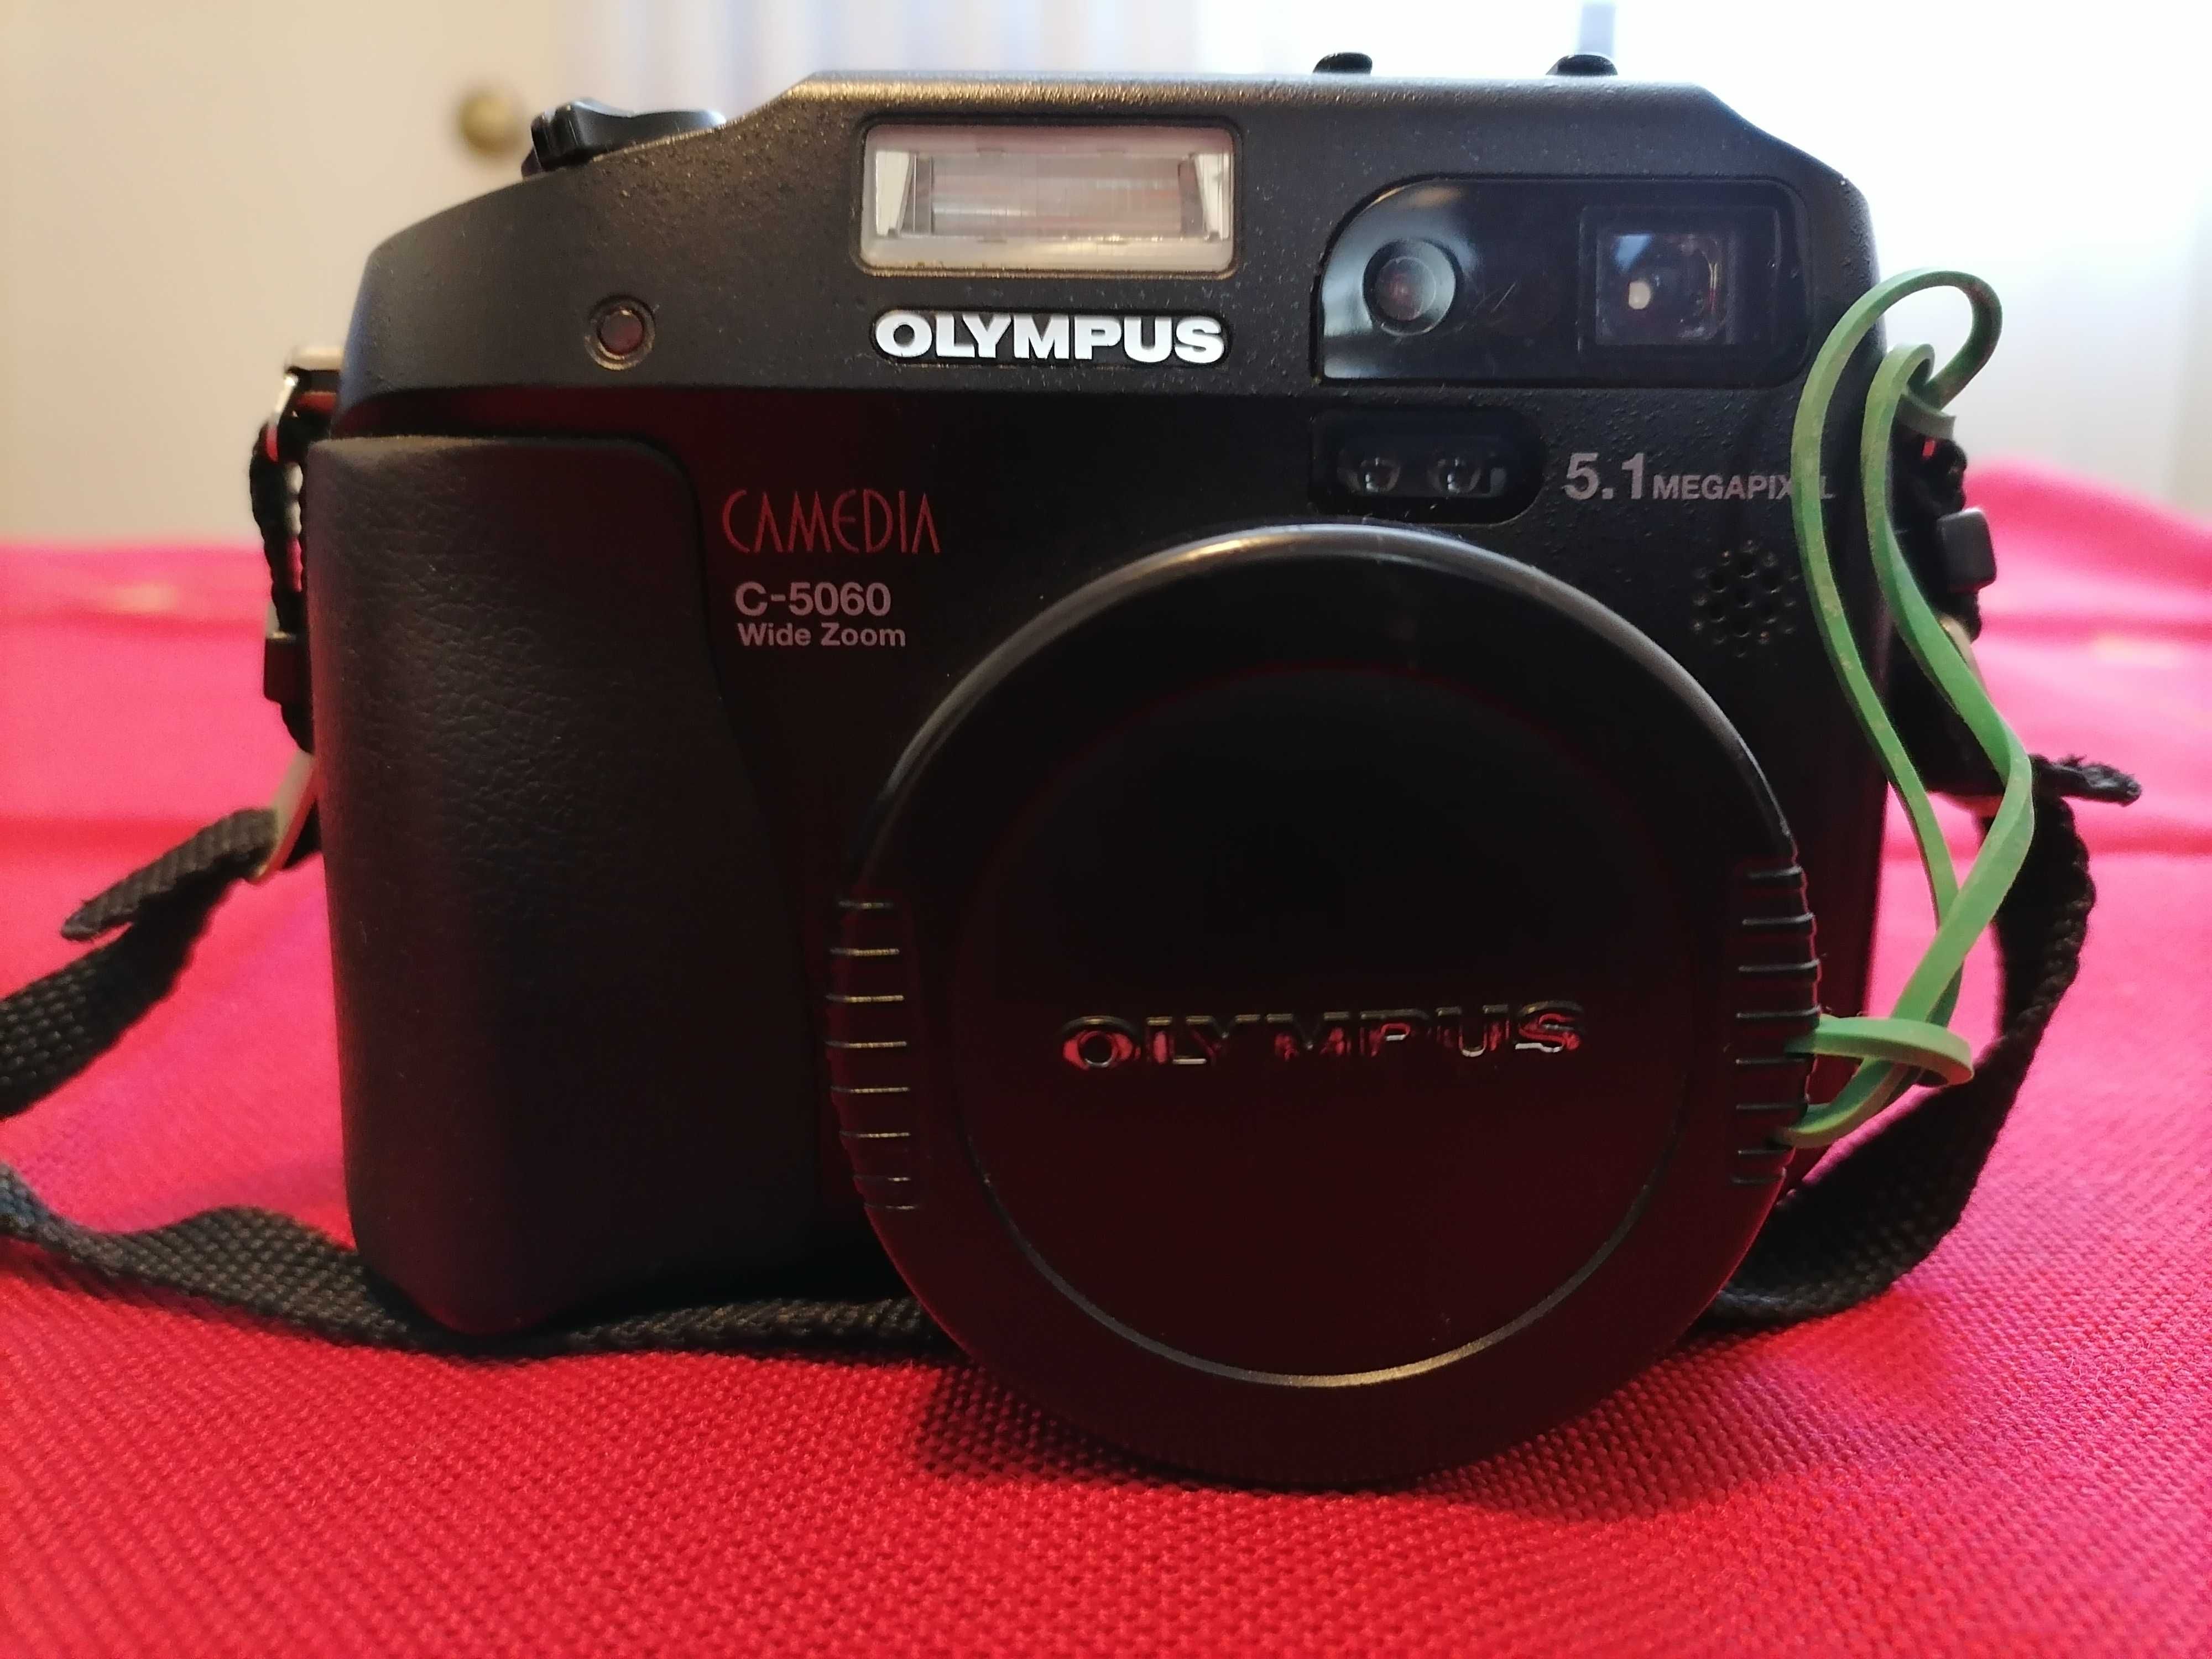 Máquina fotográfica Olympus camedia C-5060 wide zoom